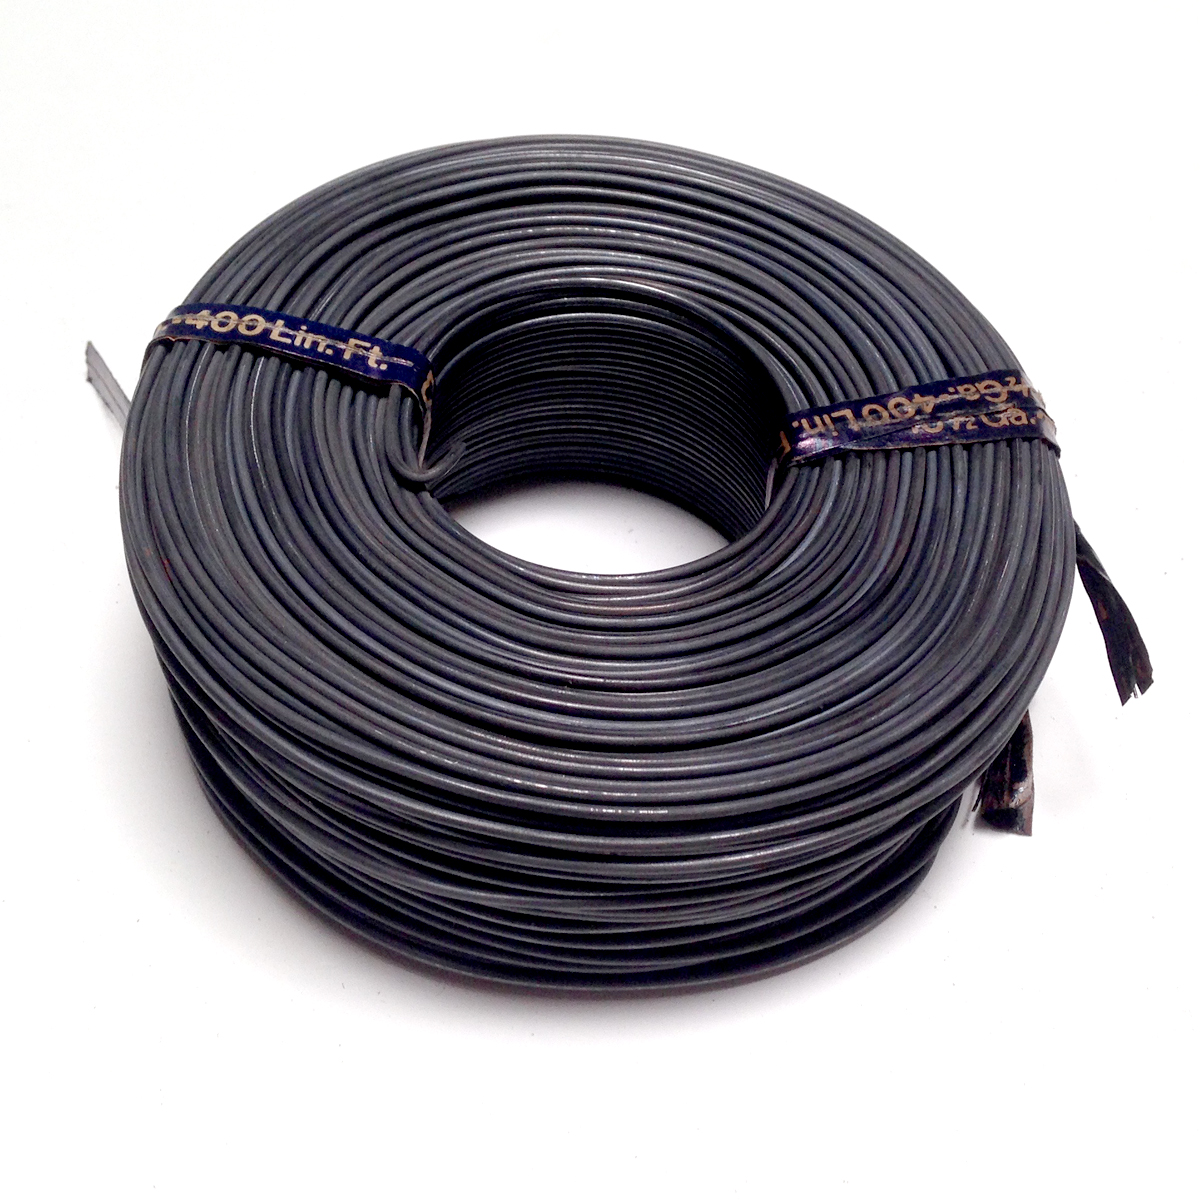 Products 400ft. 16-Gauge Tie Wire